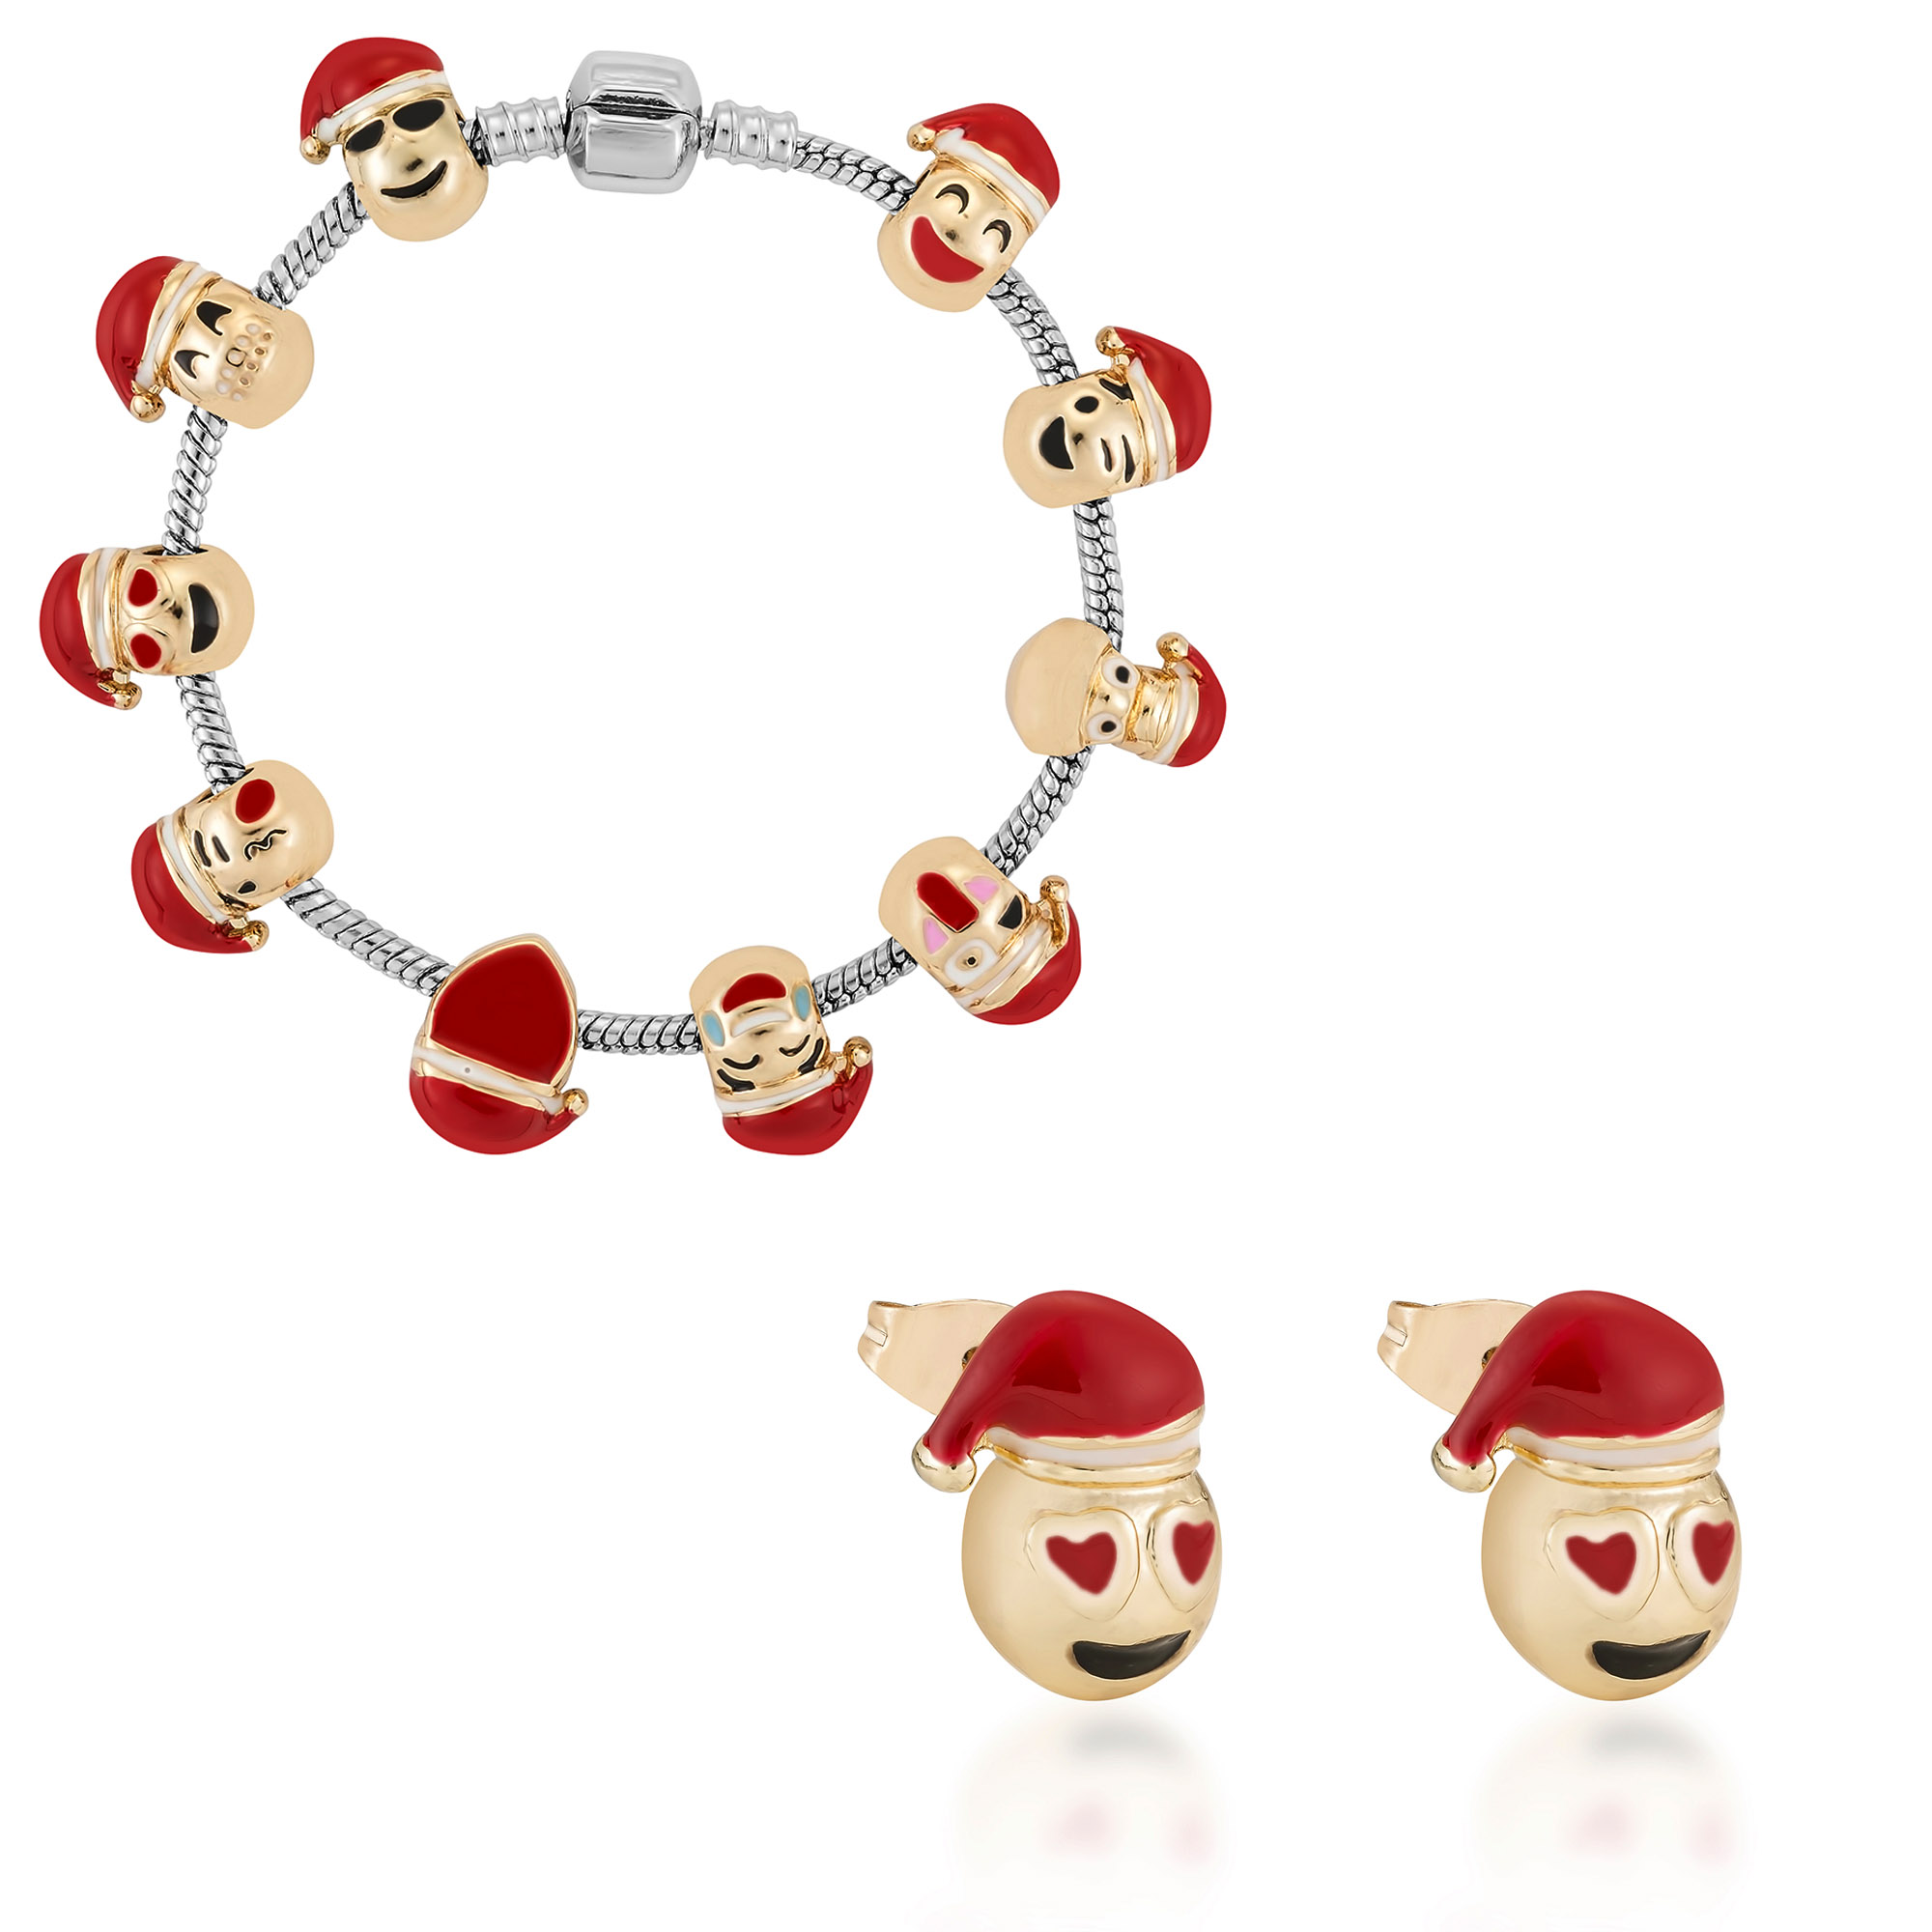 40pc Joblots Santa Emoji Charm Bracelet & Earrings 18K Gold Plating l UK SELLER l GCJ062